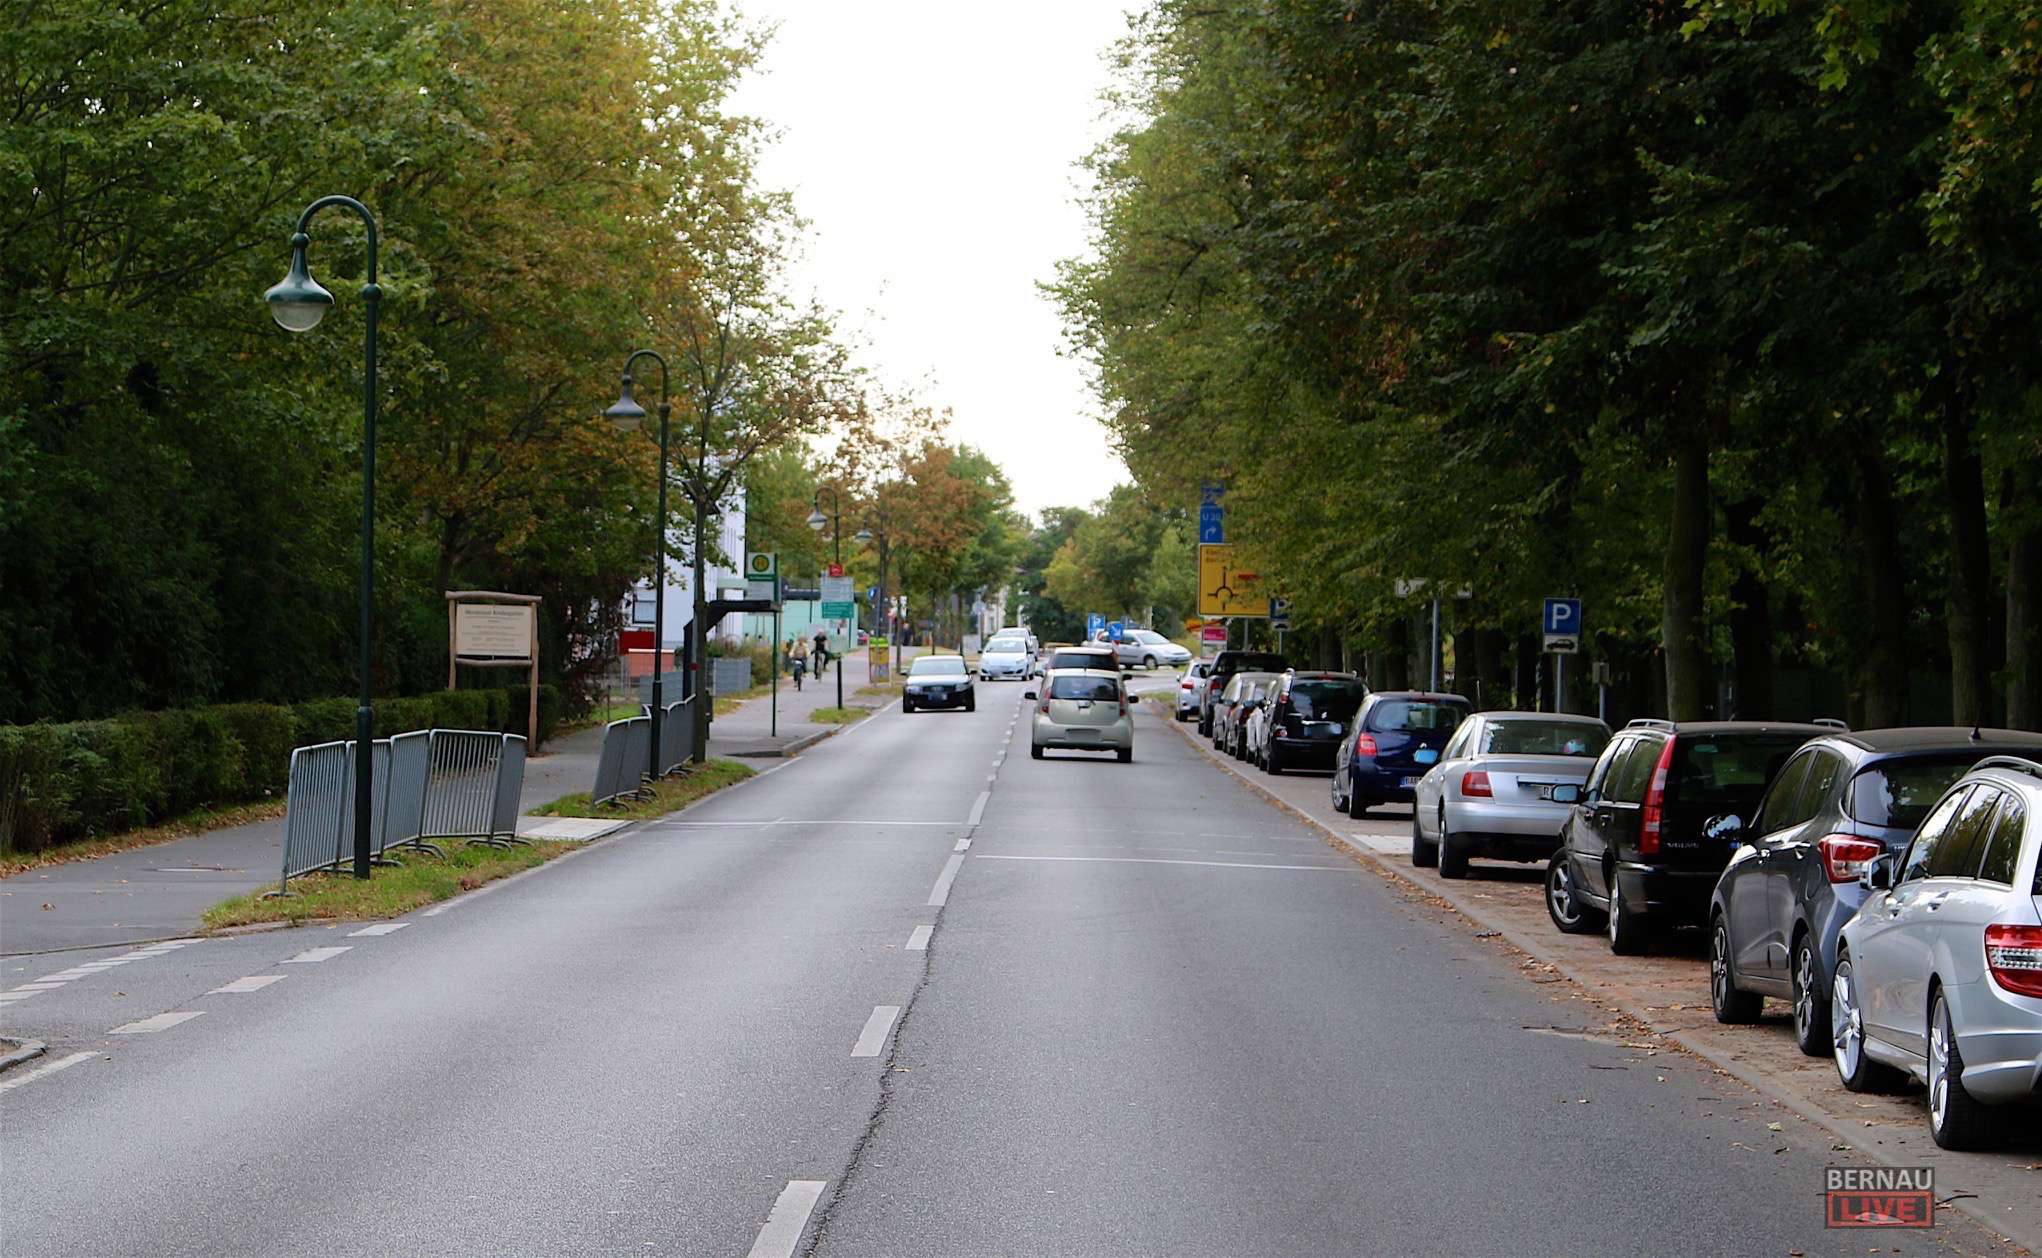 Bernau: Bedarfsampel vor Kita an der Oranienburger Strasse abgebaut